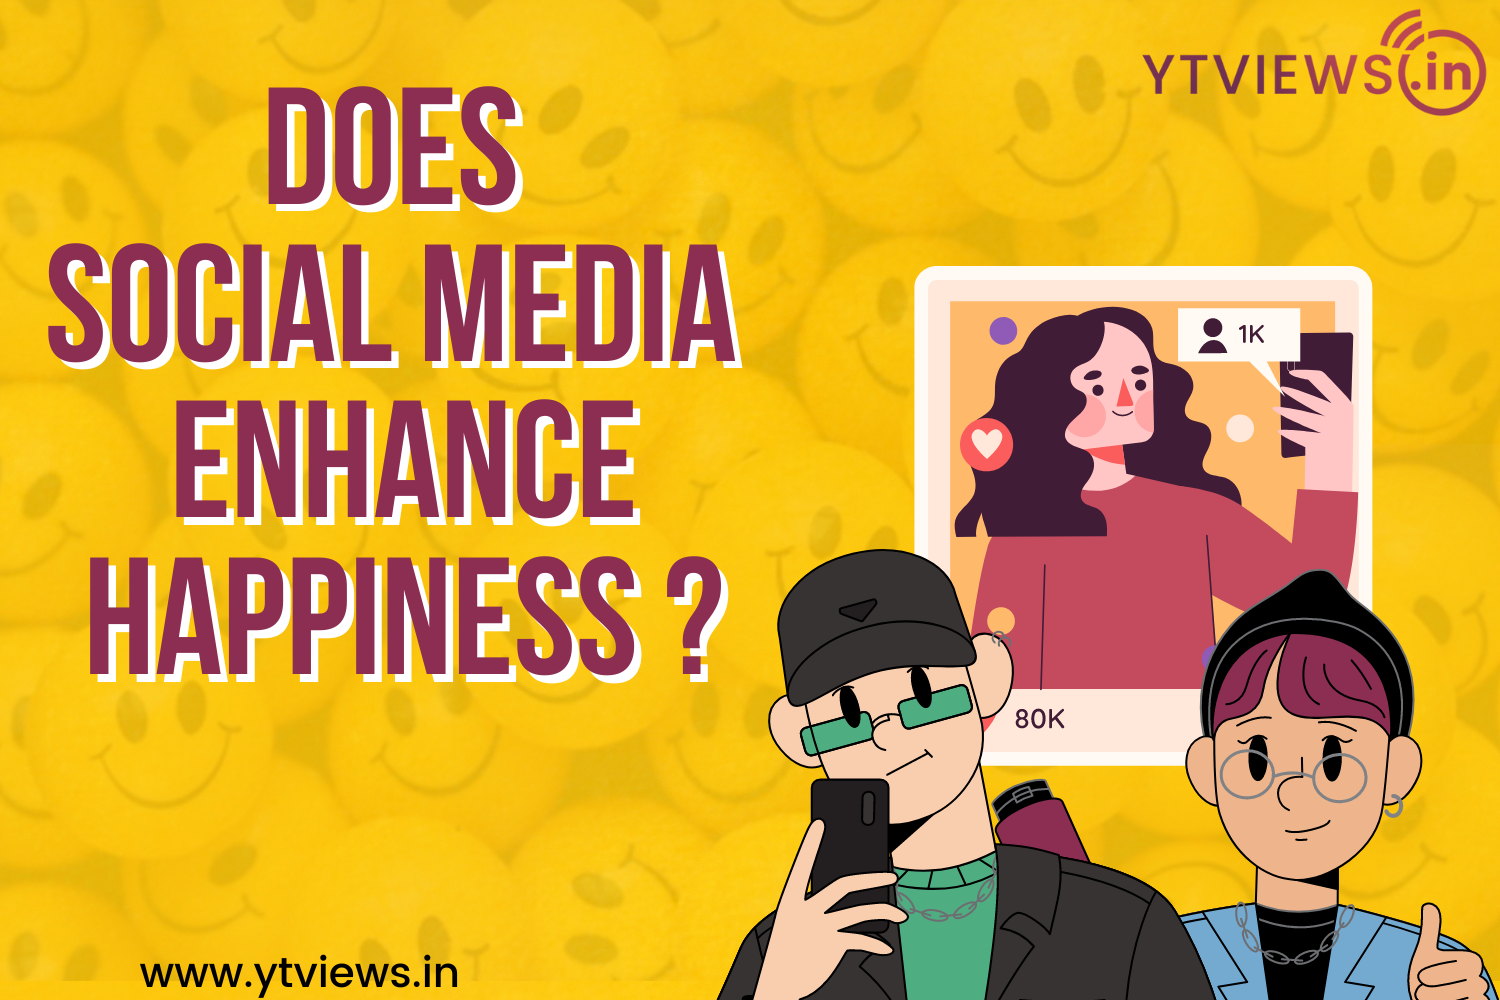 Does social media enhance happiness?